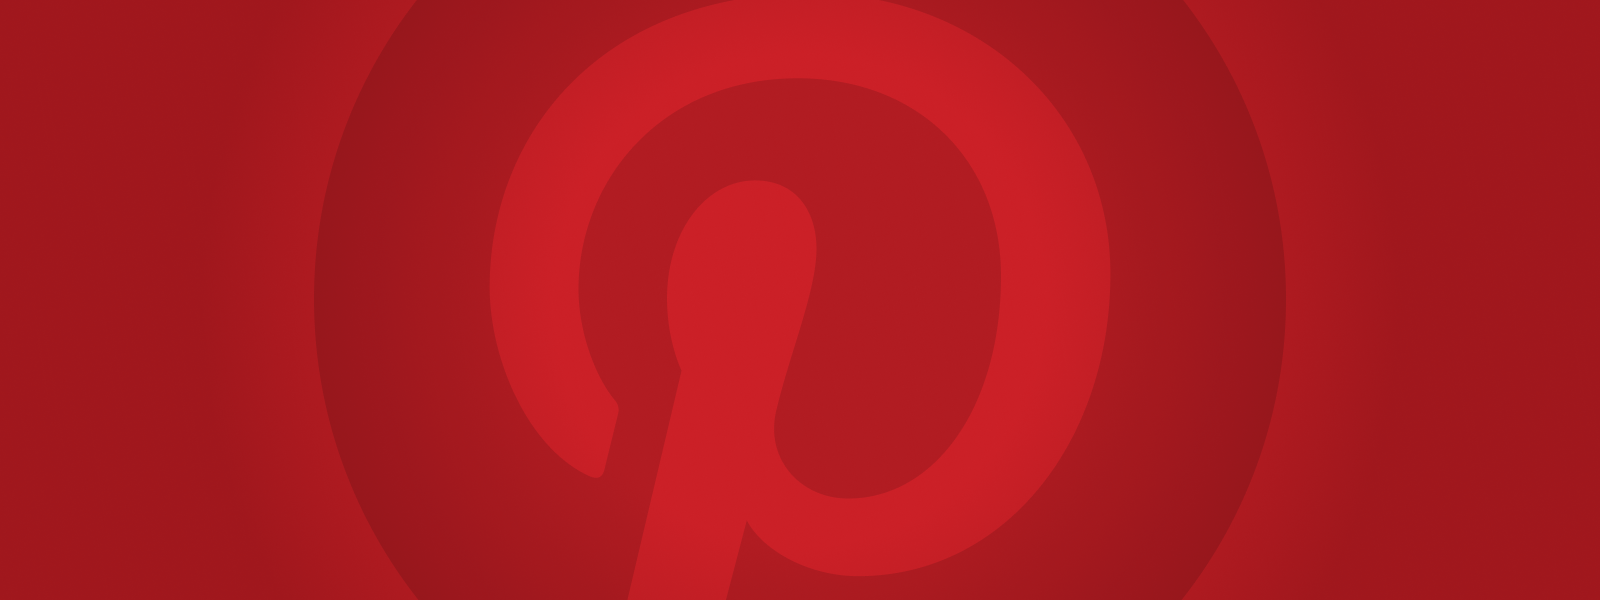 Vecteezy now offers Pinterest support